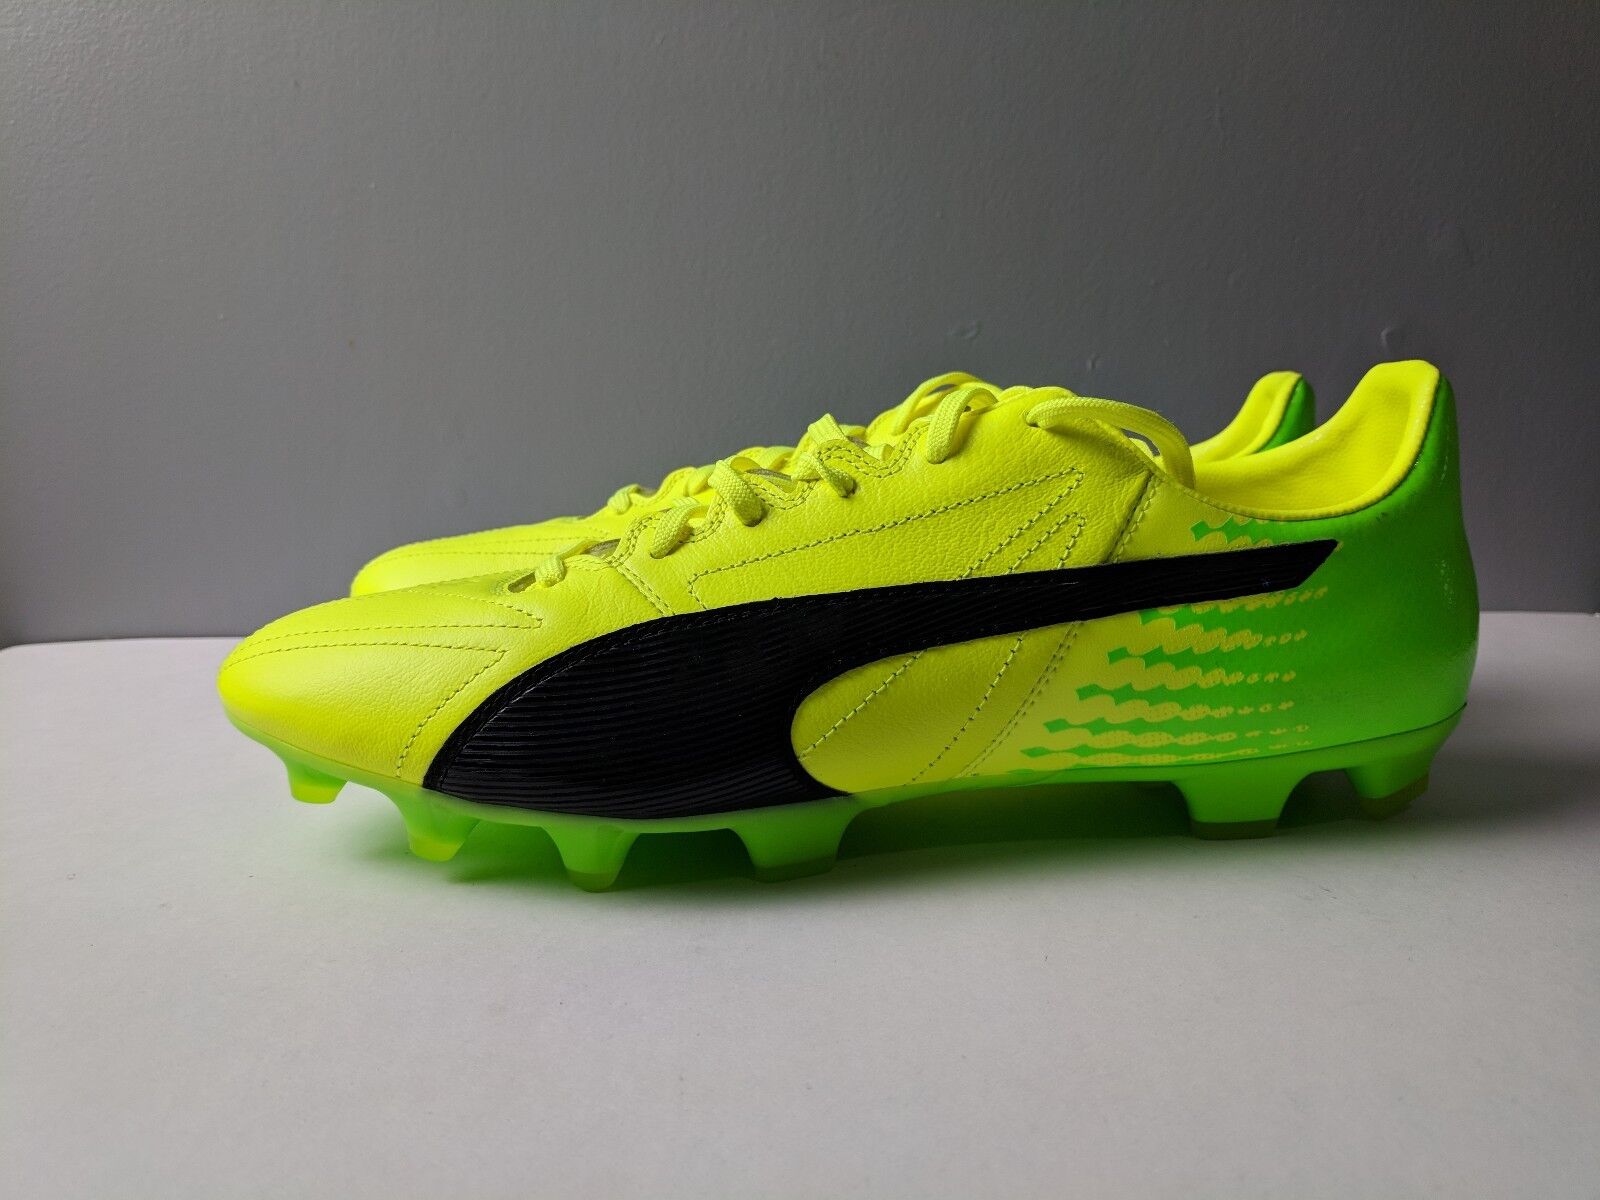 Oak innovation Gate Brand New PUMA Mens Evospeed 17.2 Lth FG Soccer Cleats Shoe Men Size 13 |  eBay